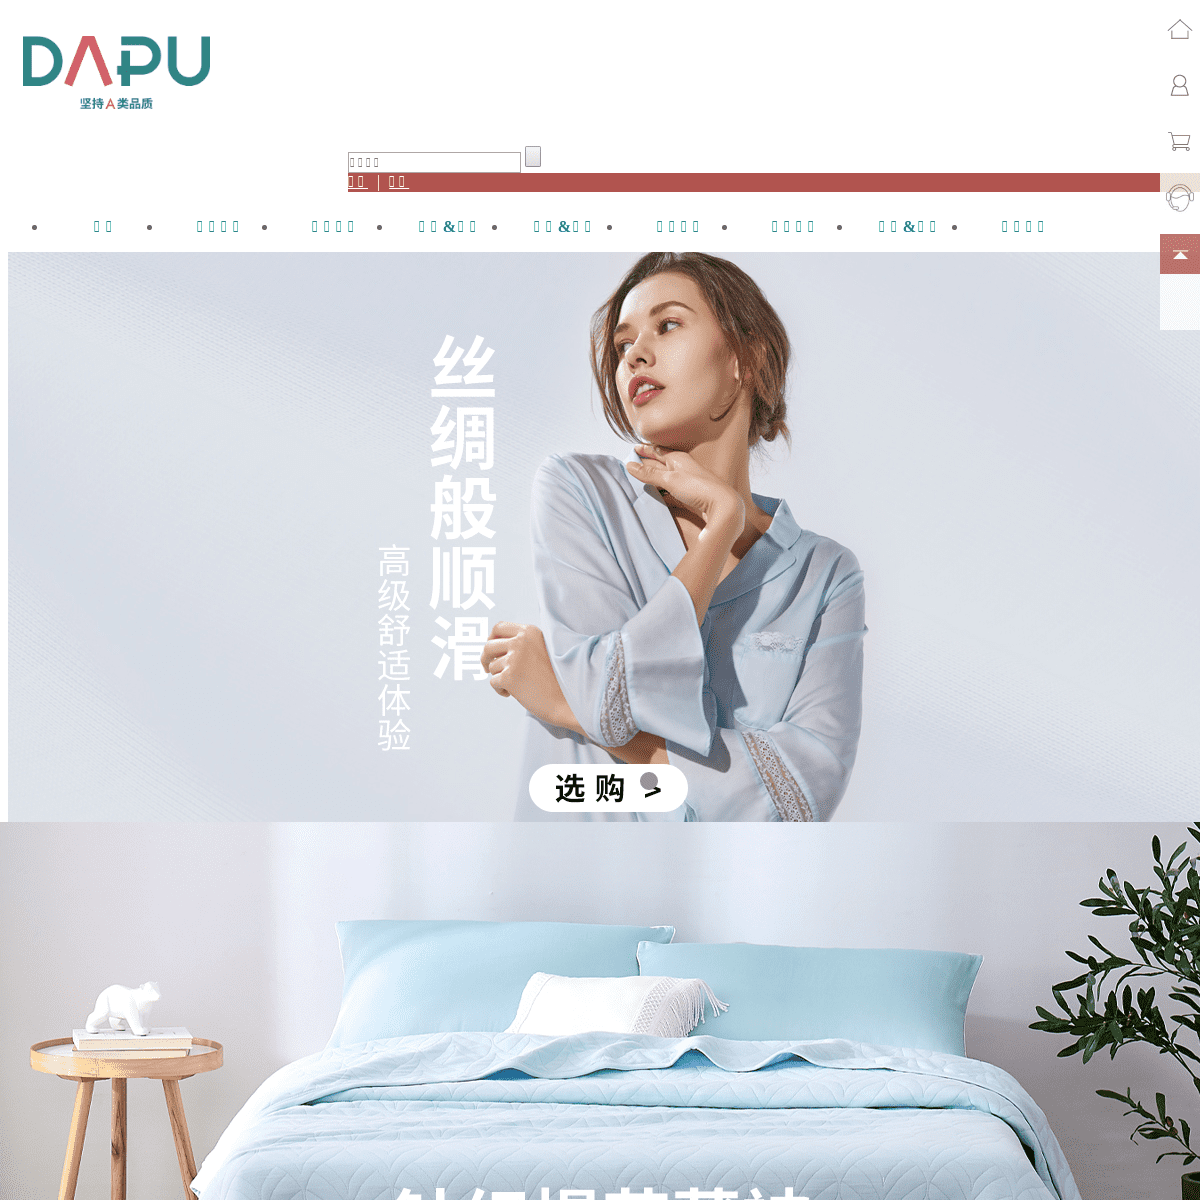 A complete backup of dapu.com